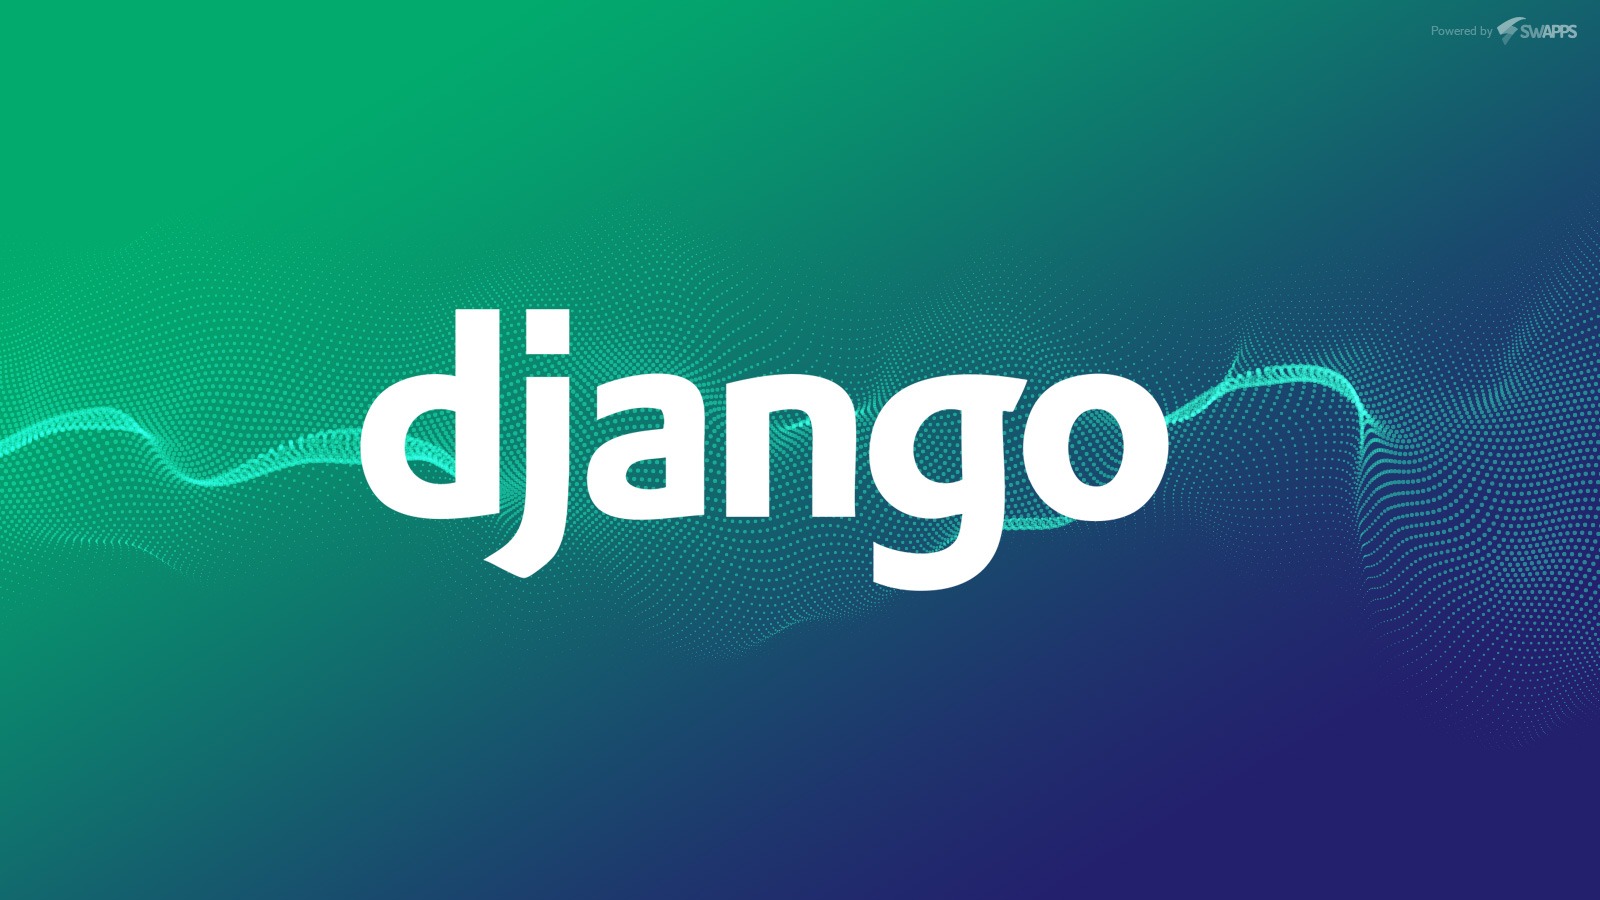 Django python site. Django фреймворк. Django логотип. Django питон. Python-фреймворк Django.